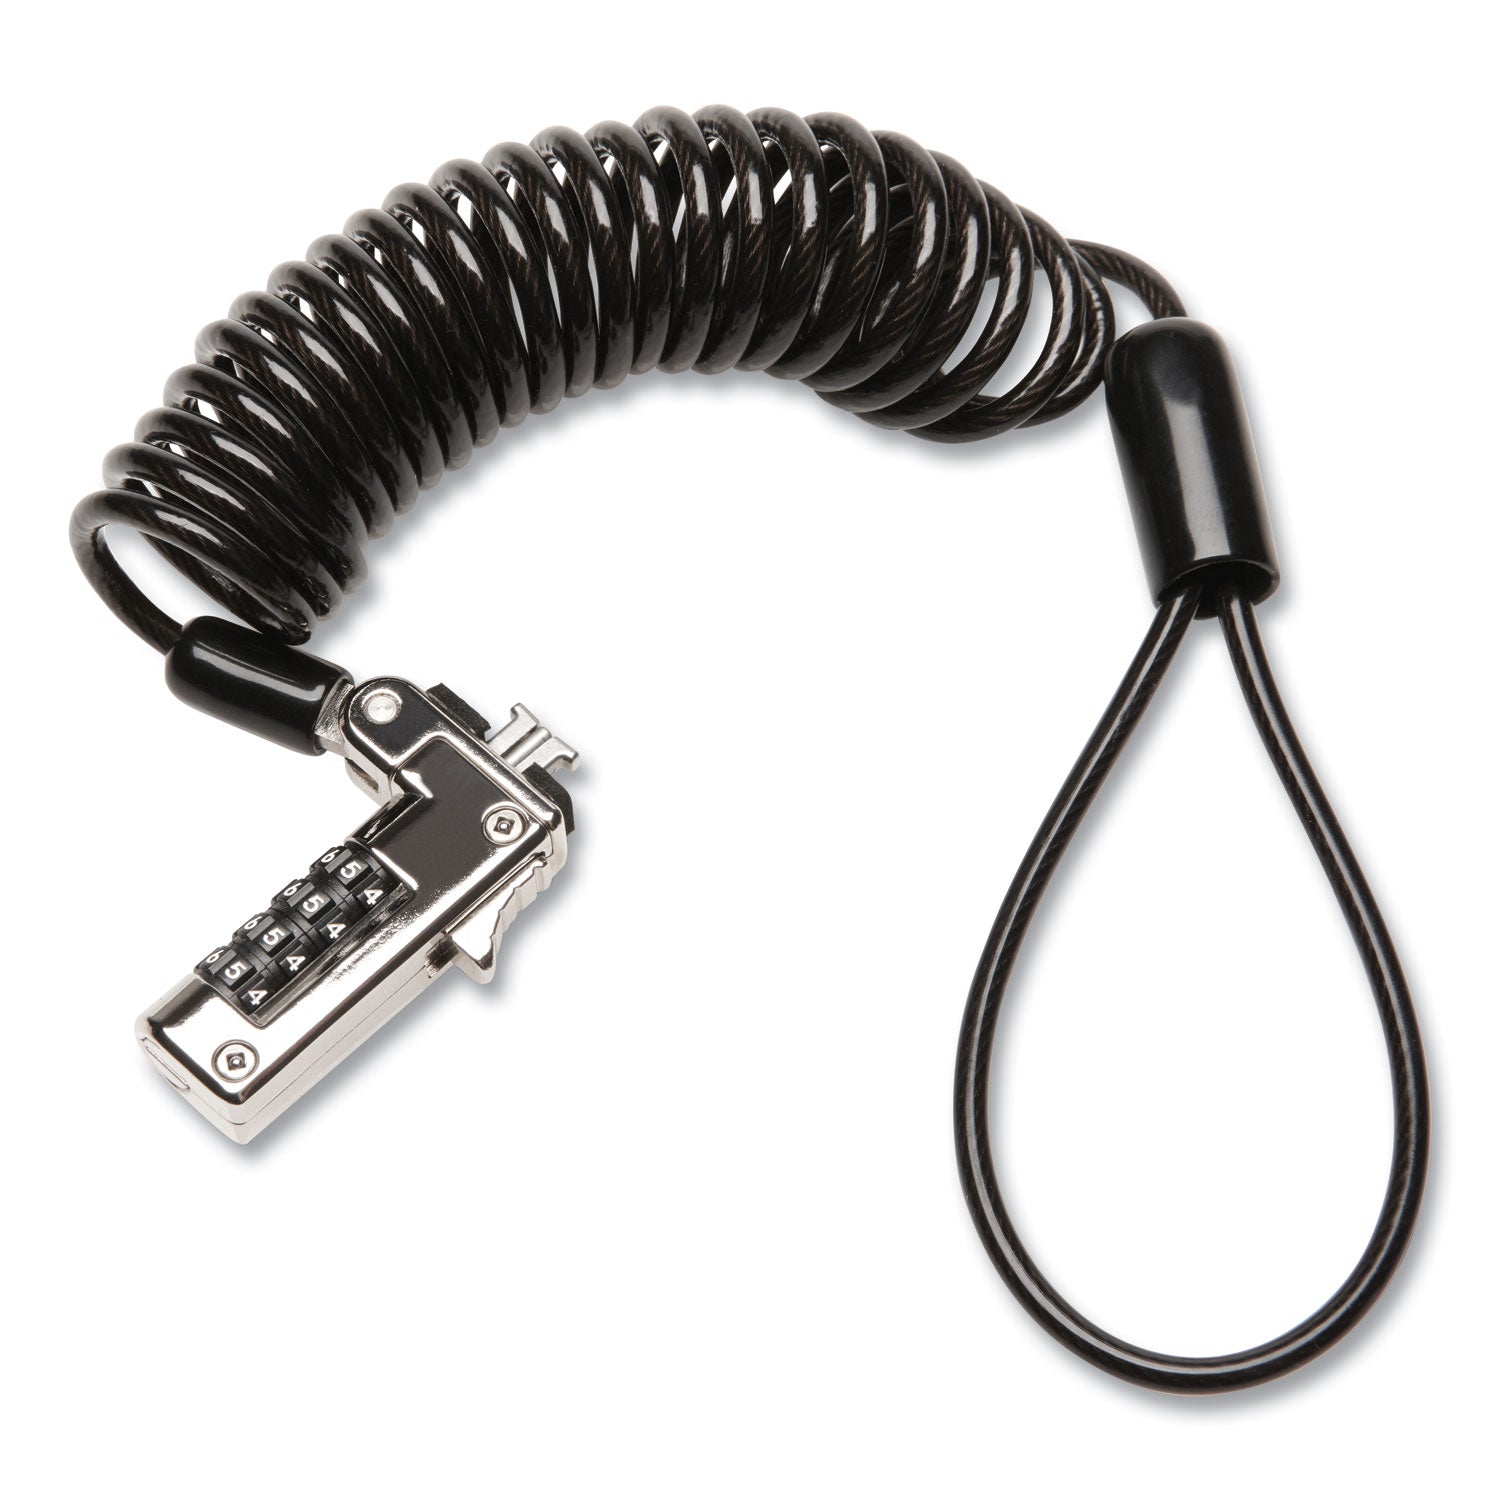 slim-portable-combination-lock-for-standard-slot-6-ft-carbon-steel-cable-black-silver_kmwk60625ww - 1